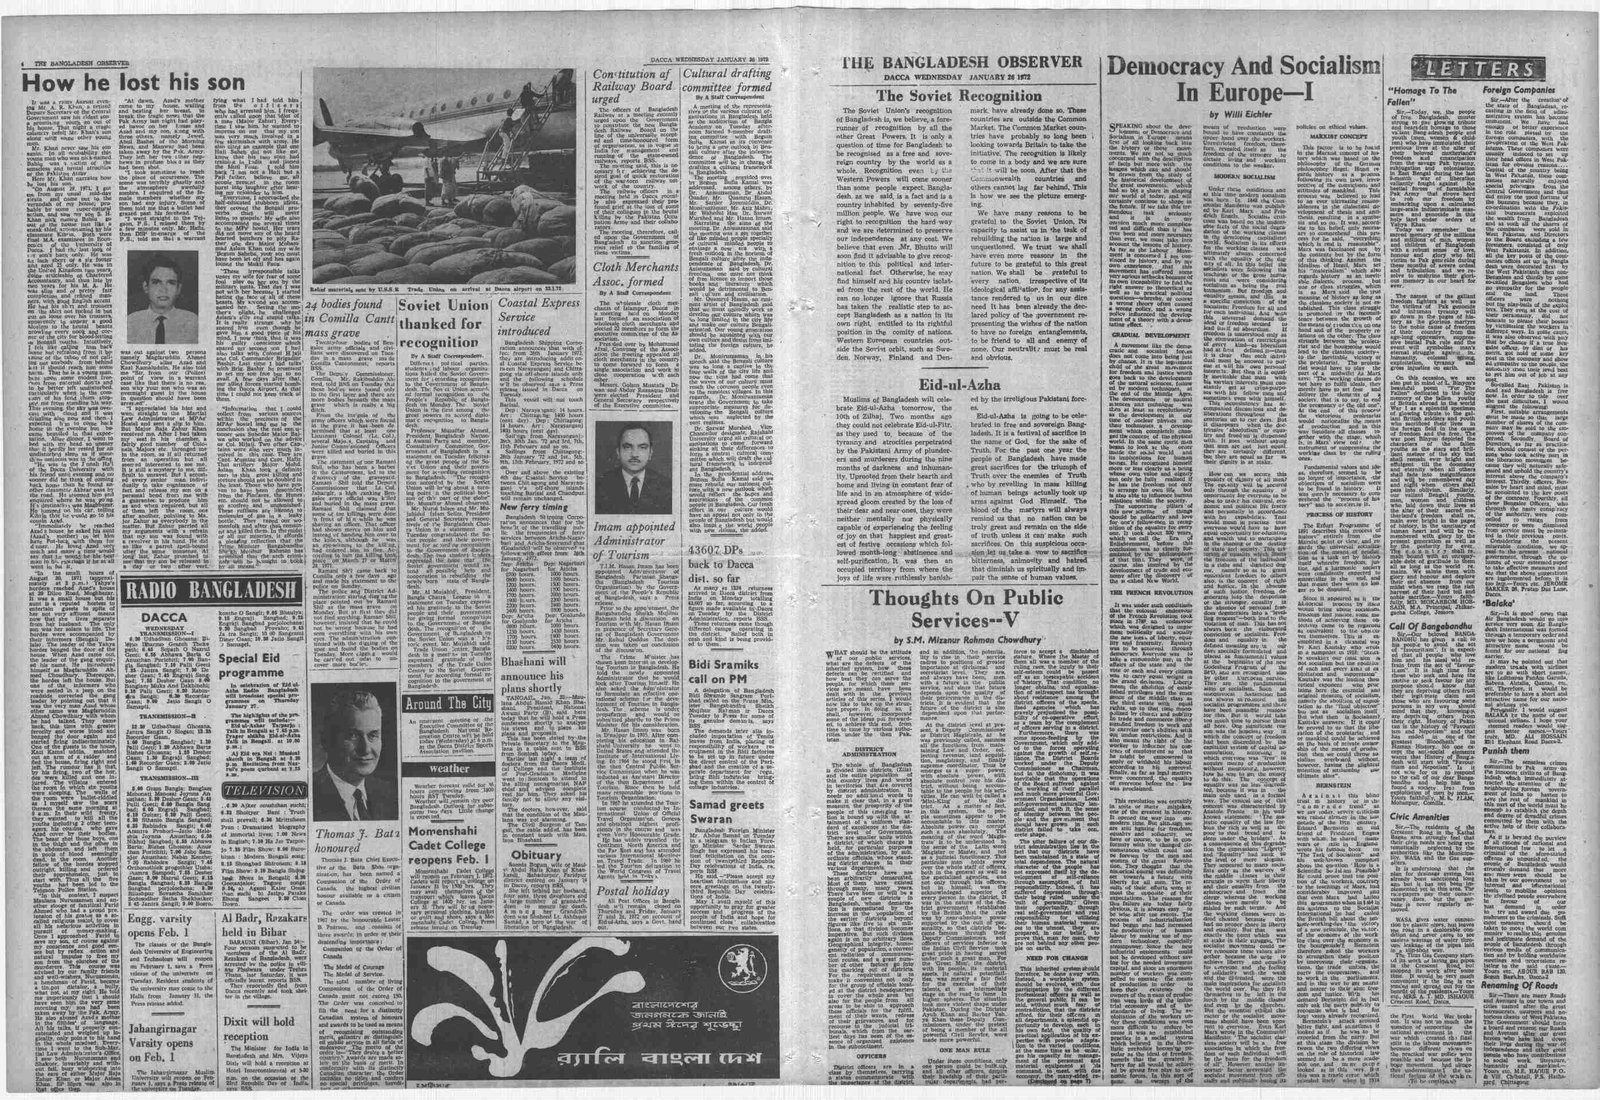 26JAN1972-Bangladesh Observer-Regular-Page 4 and 5